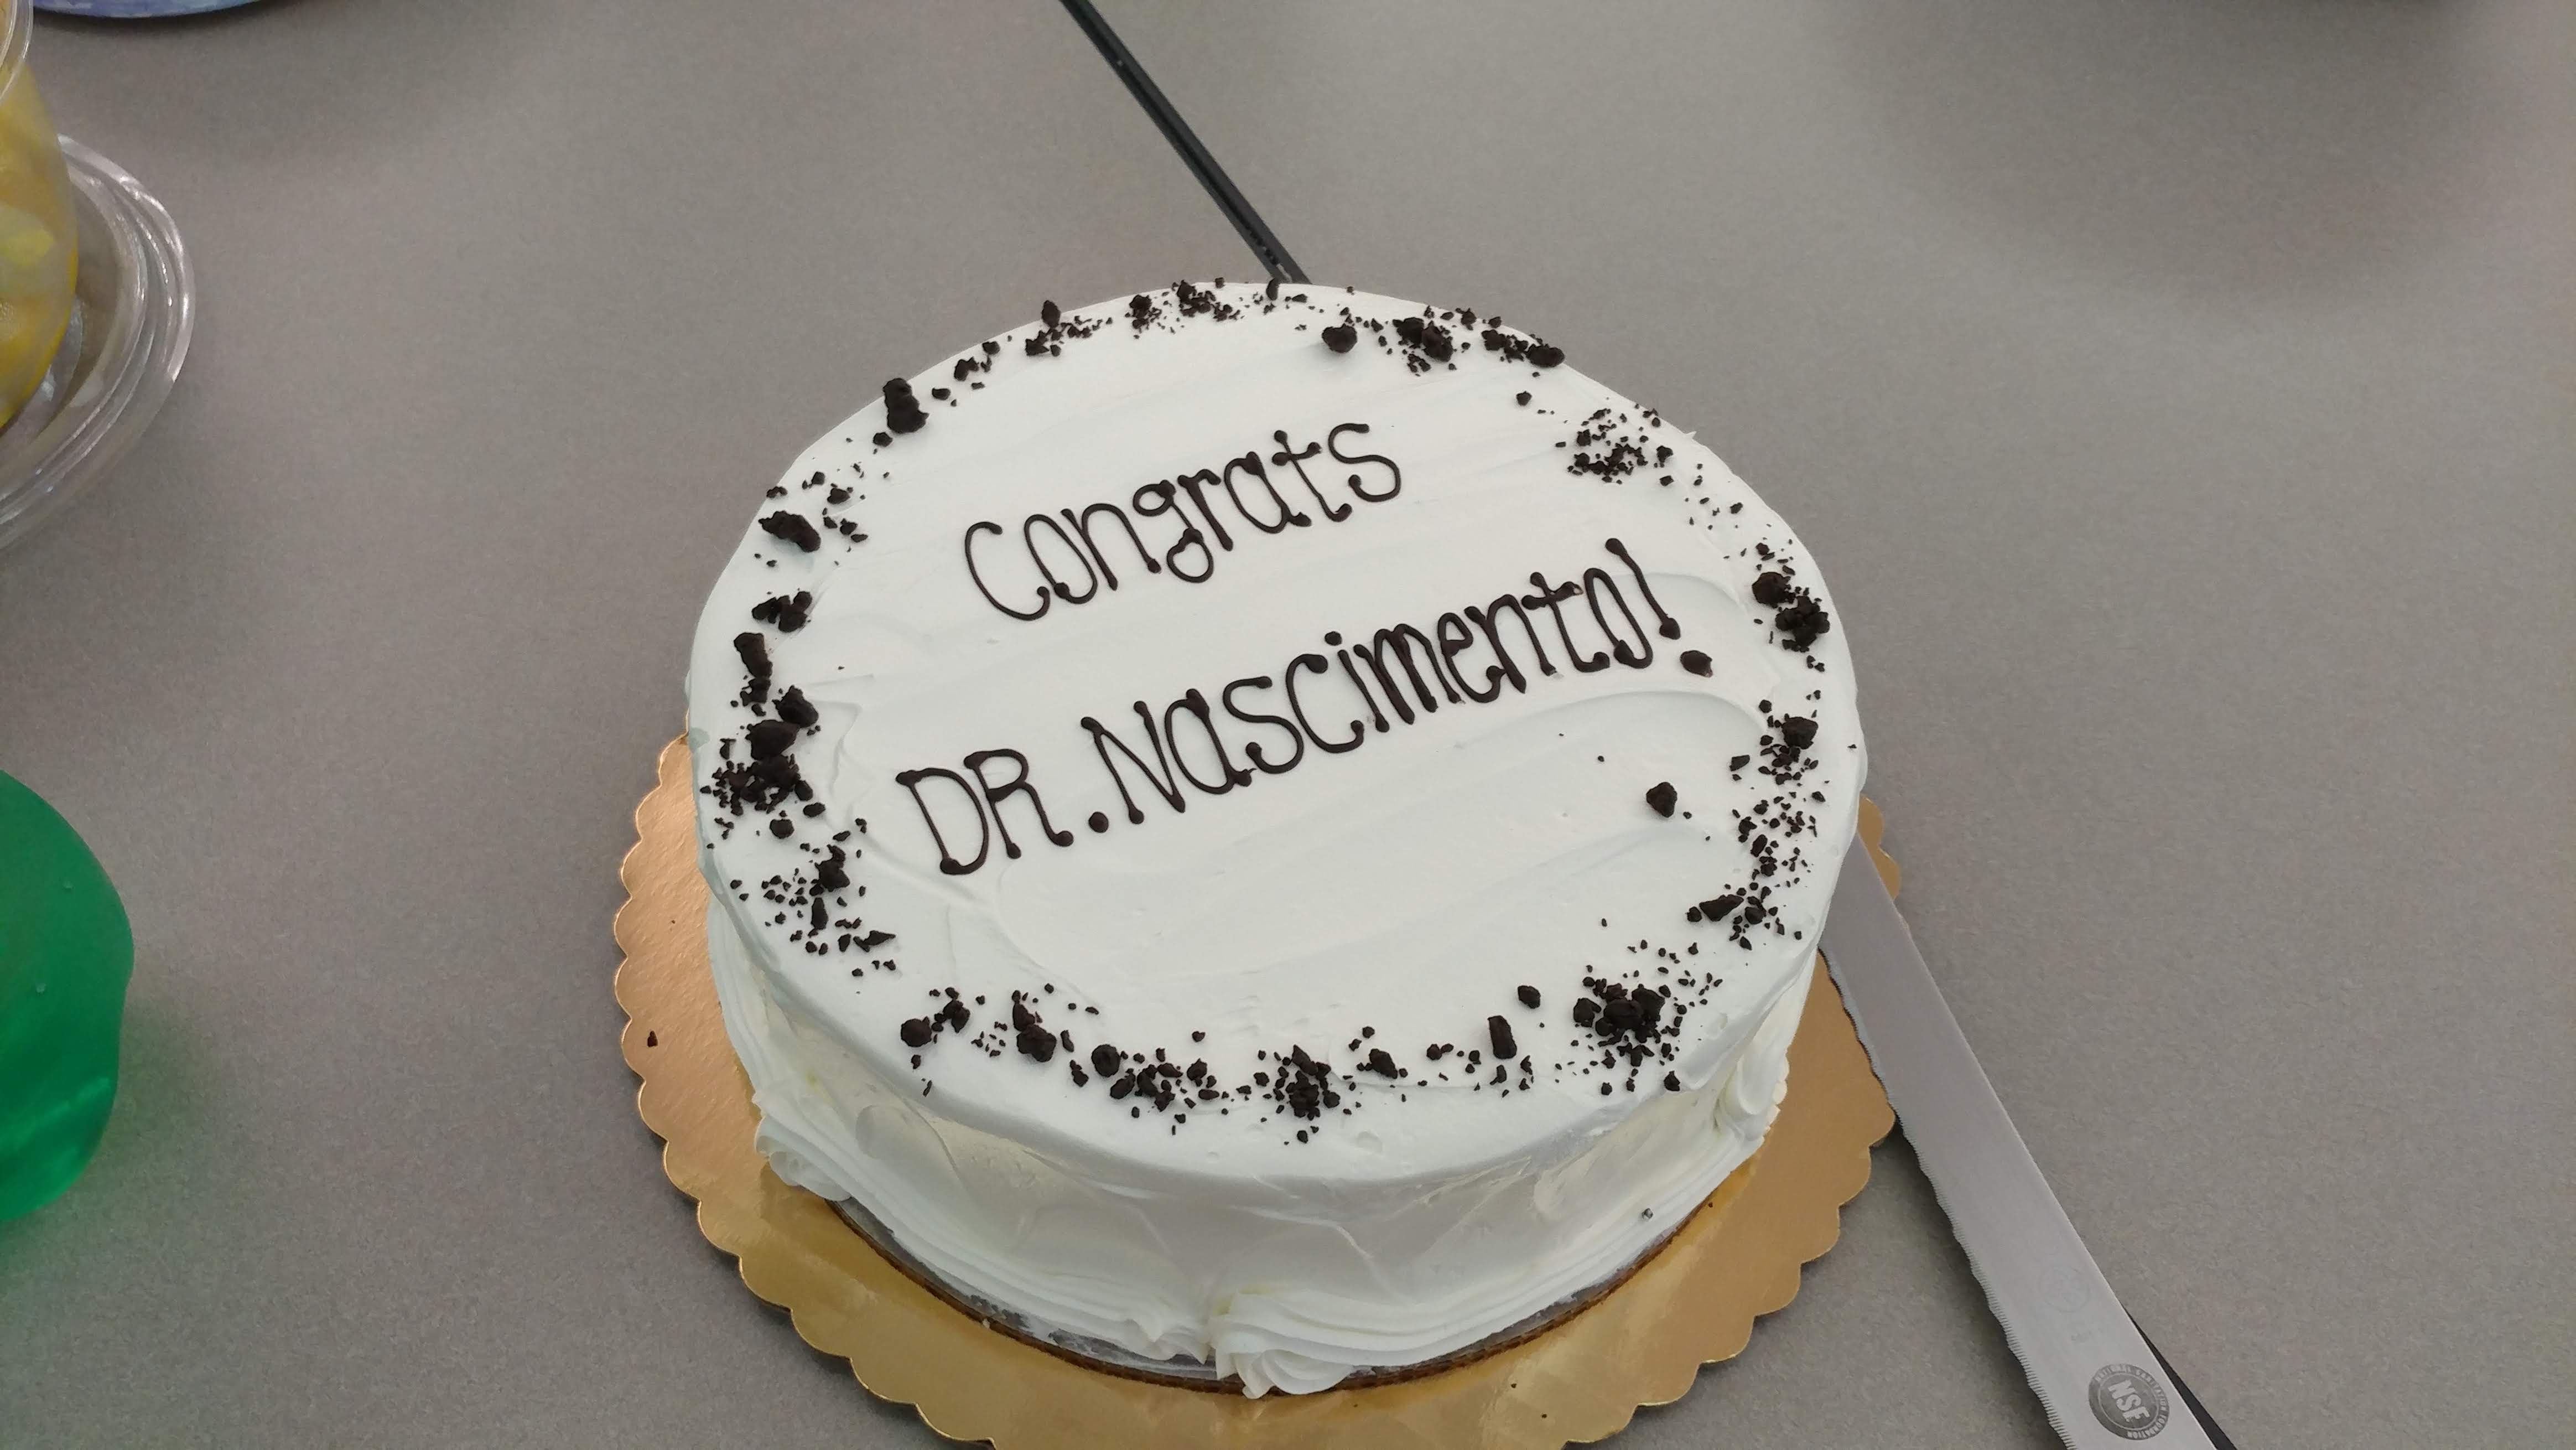 White cake to celebrate Dr. Nacimento's defense. 